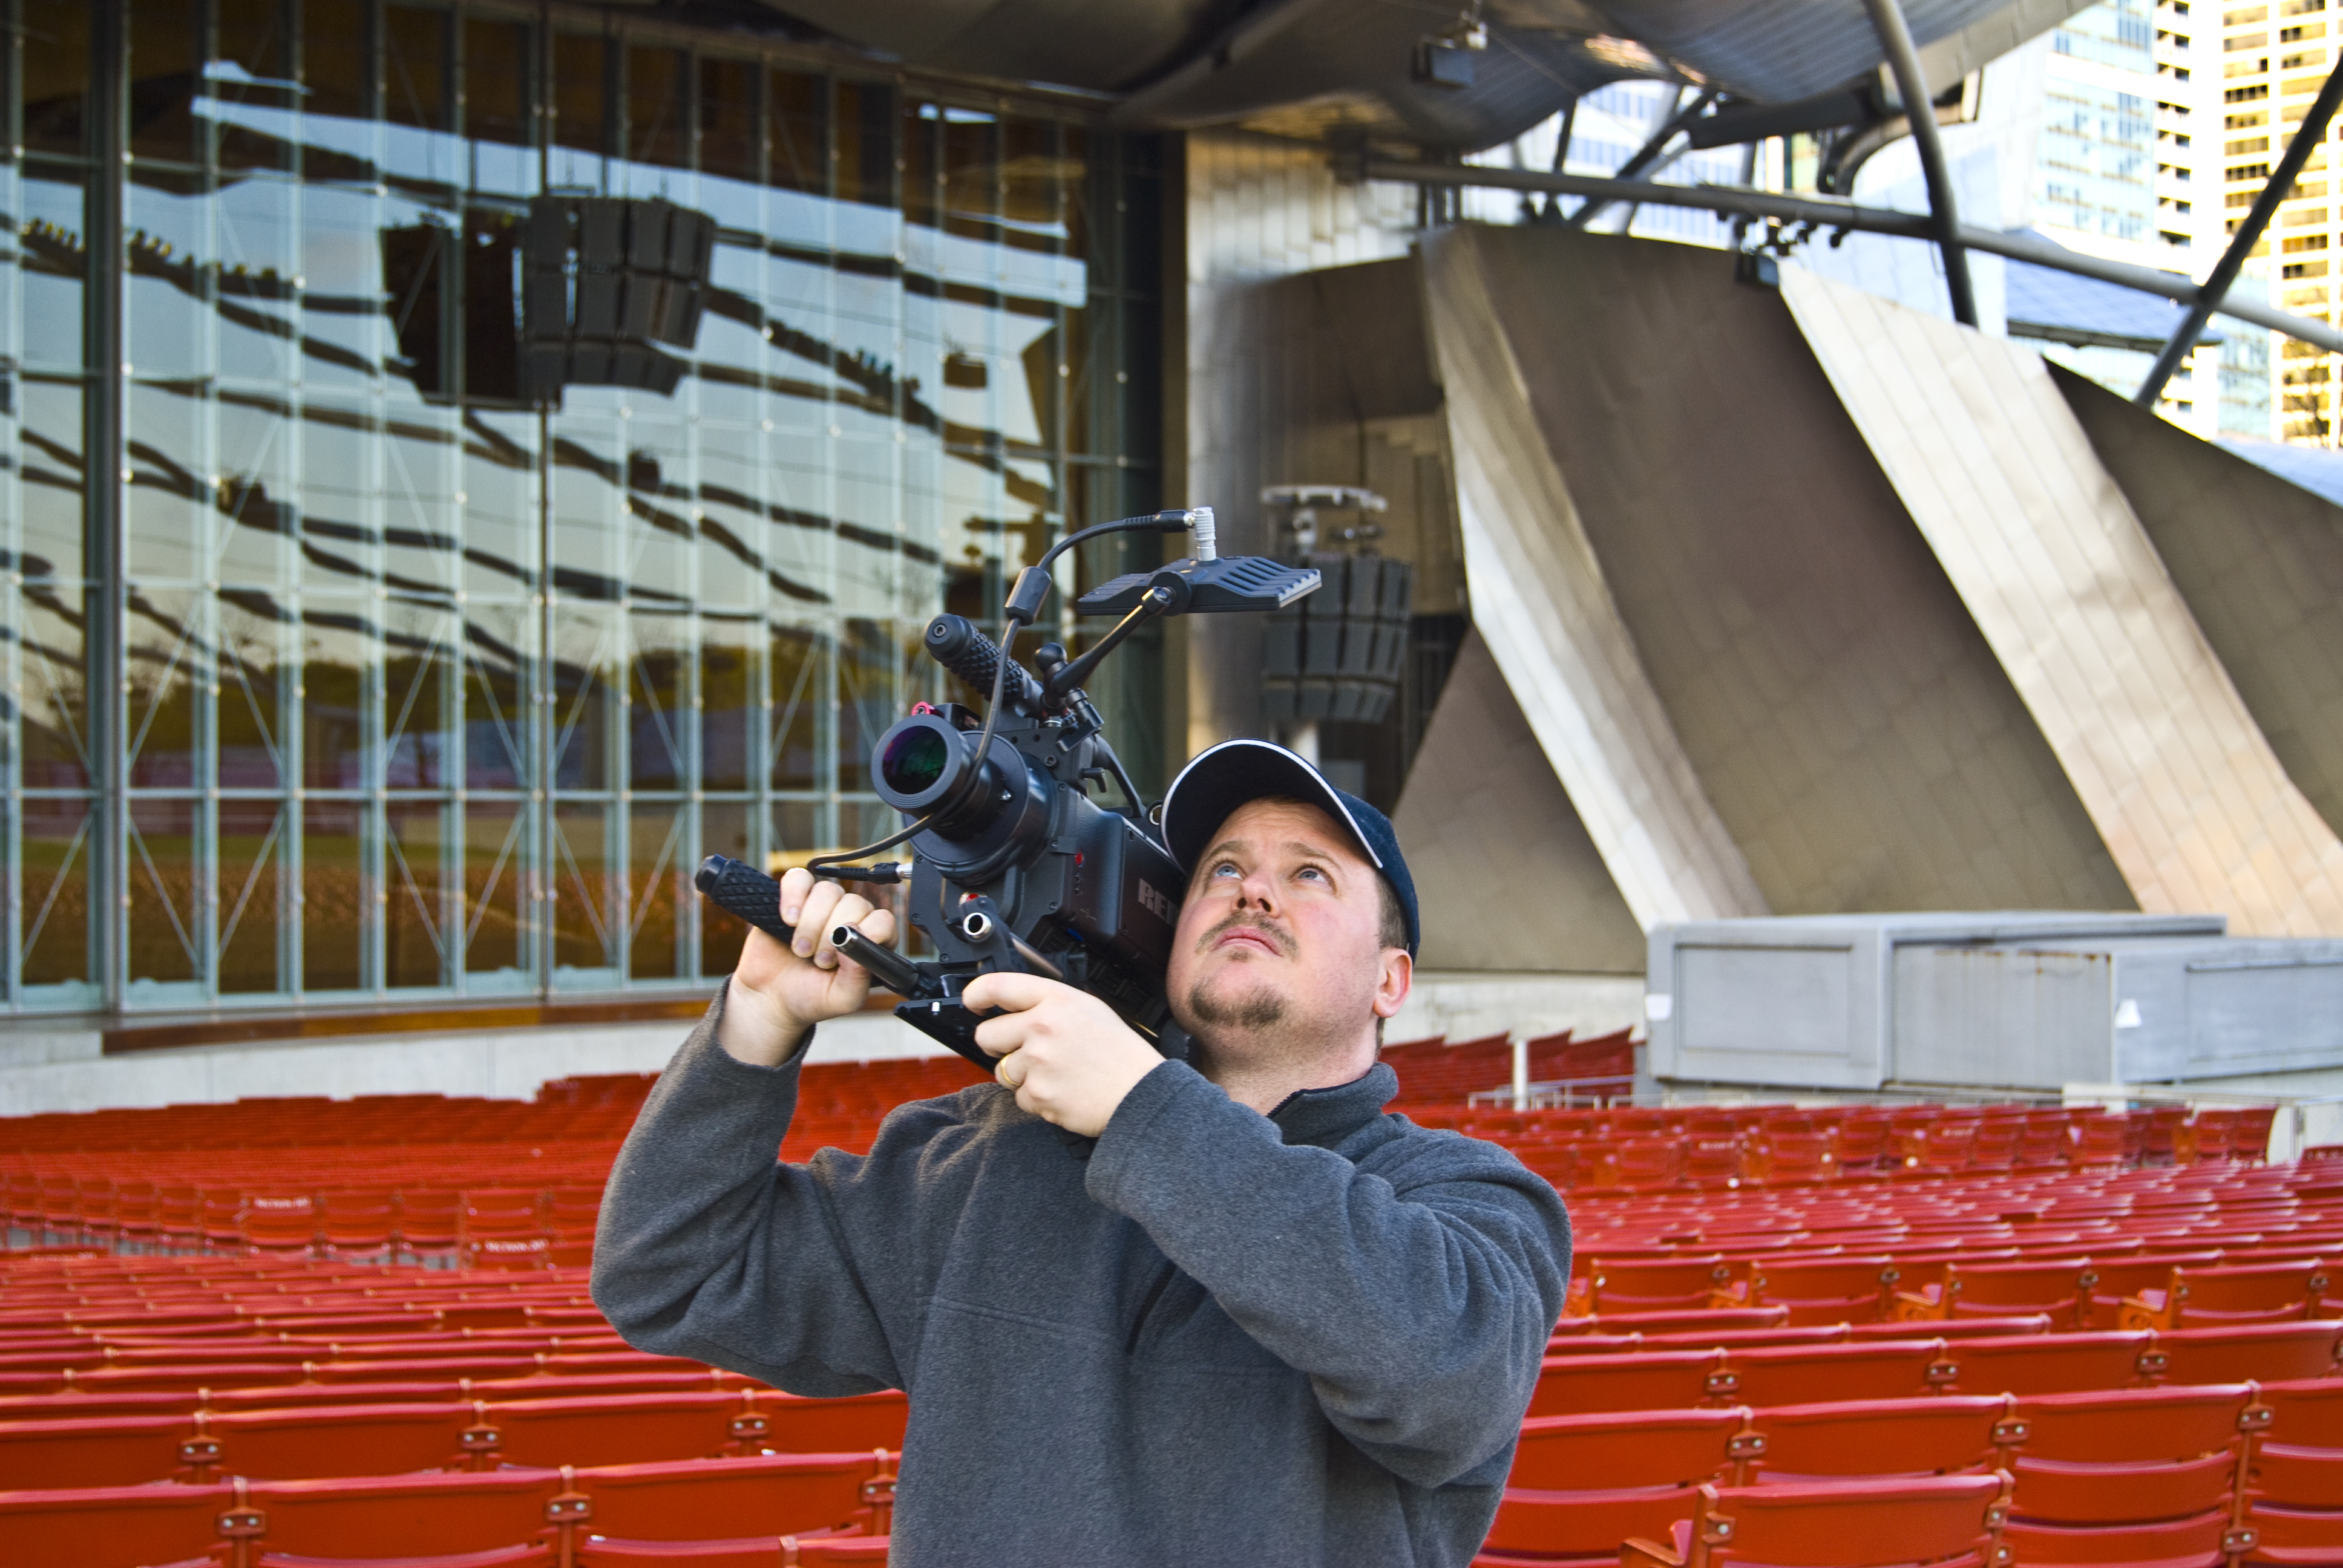 Matt Mascheri with RED camera